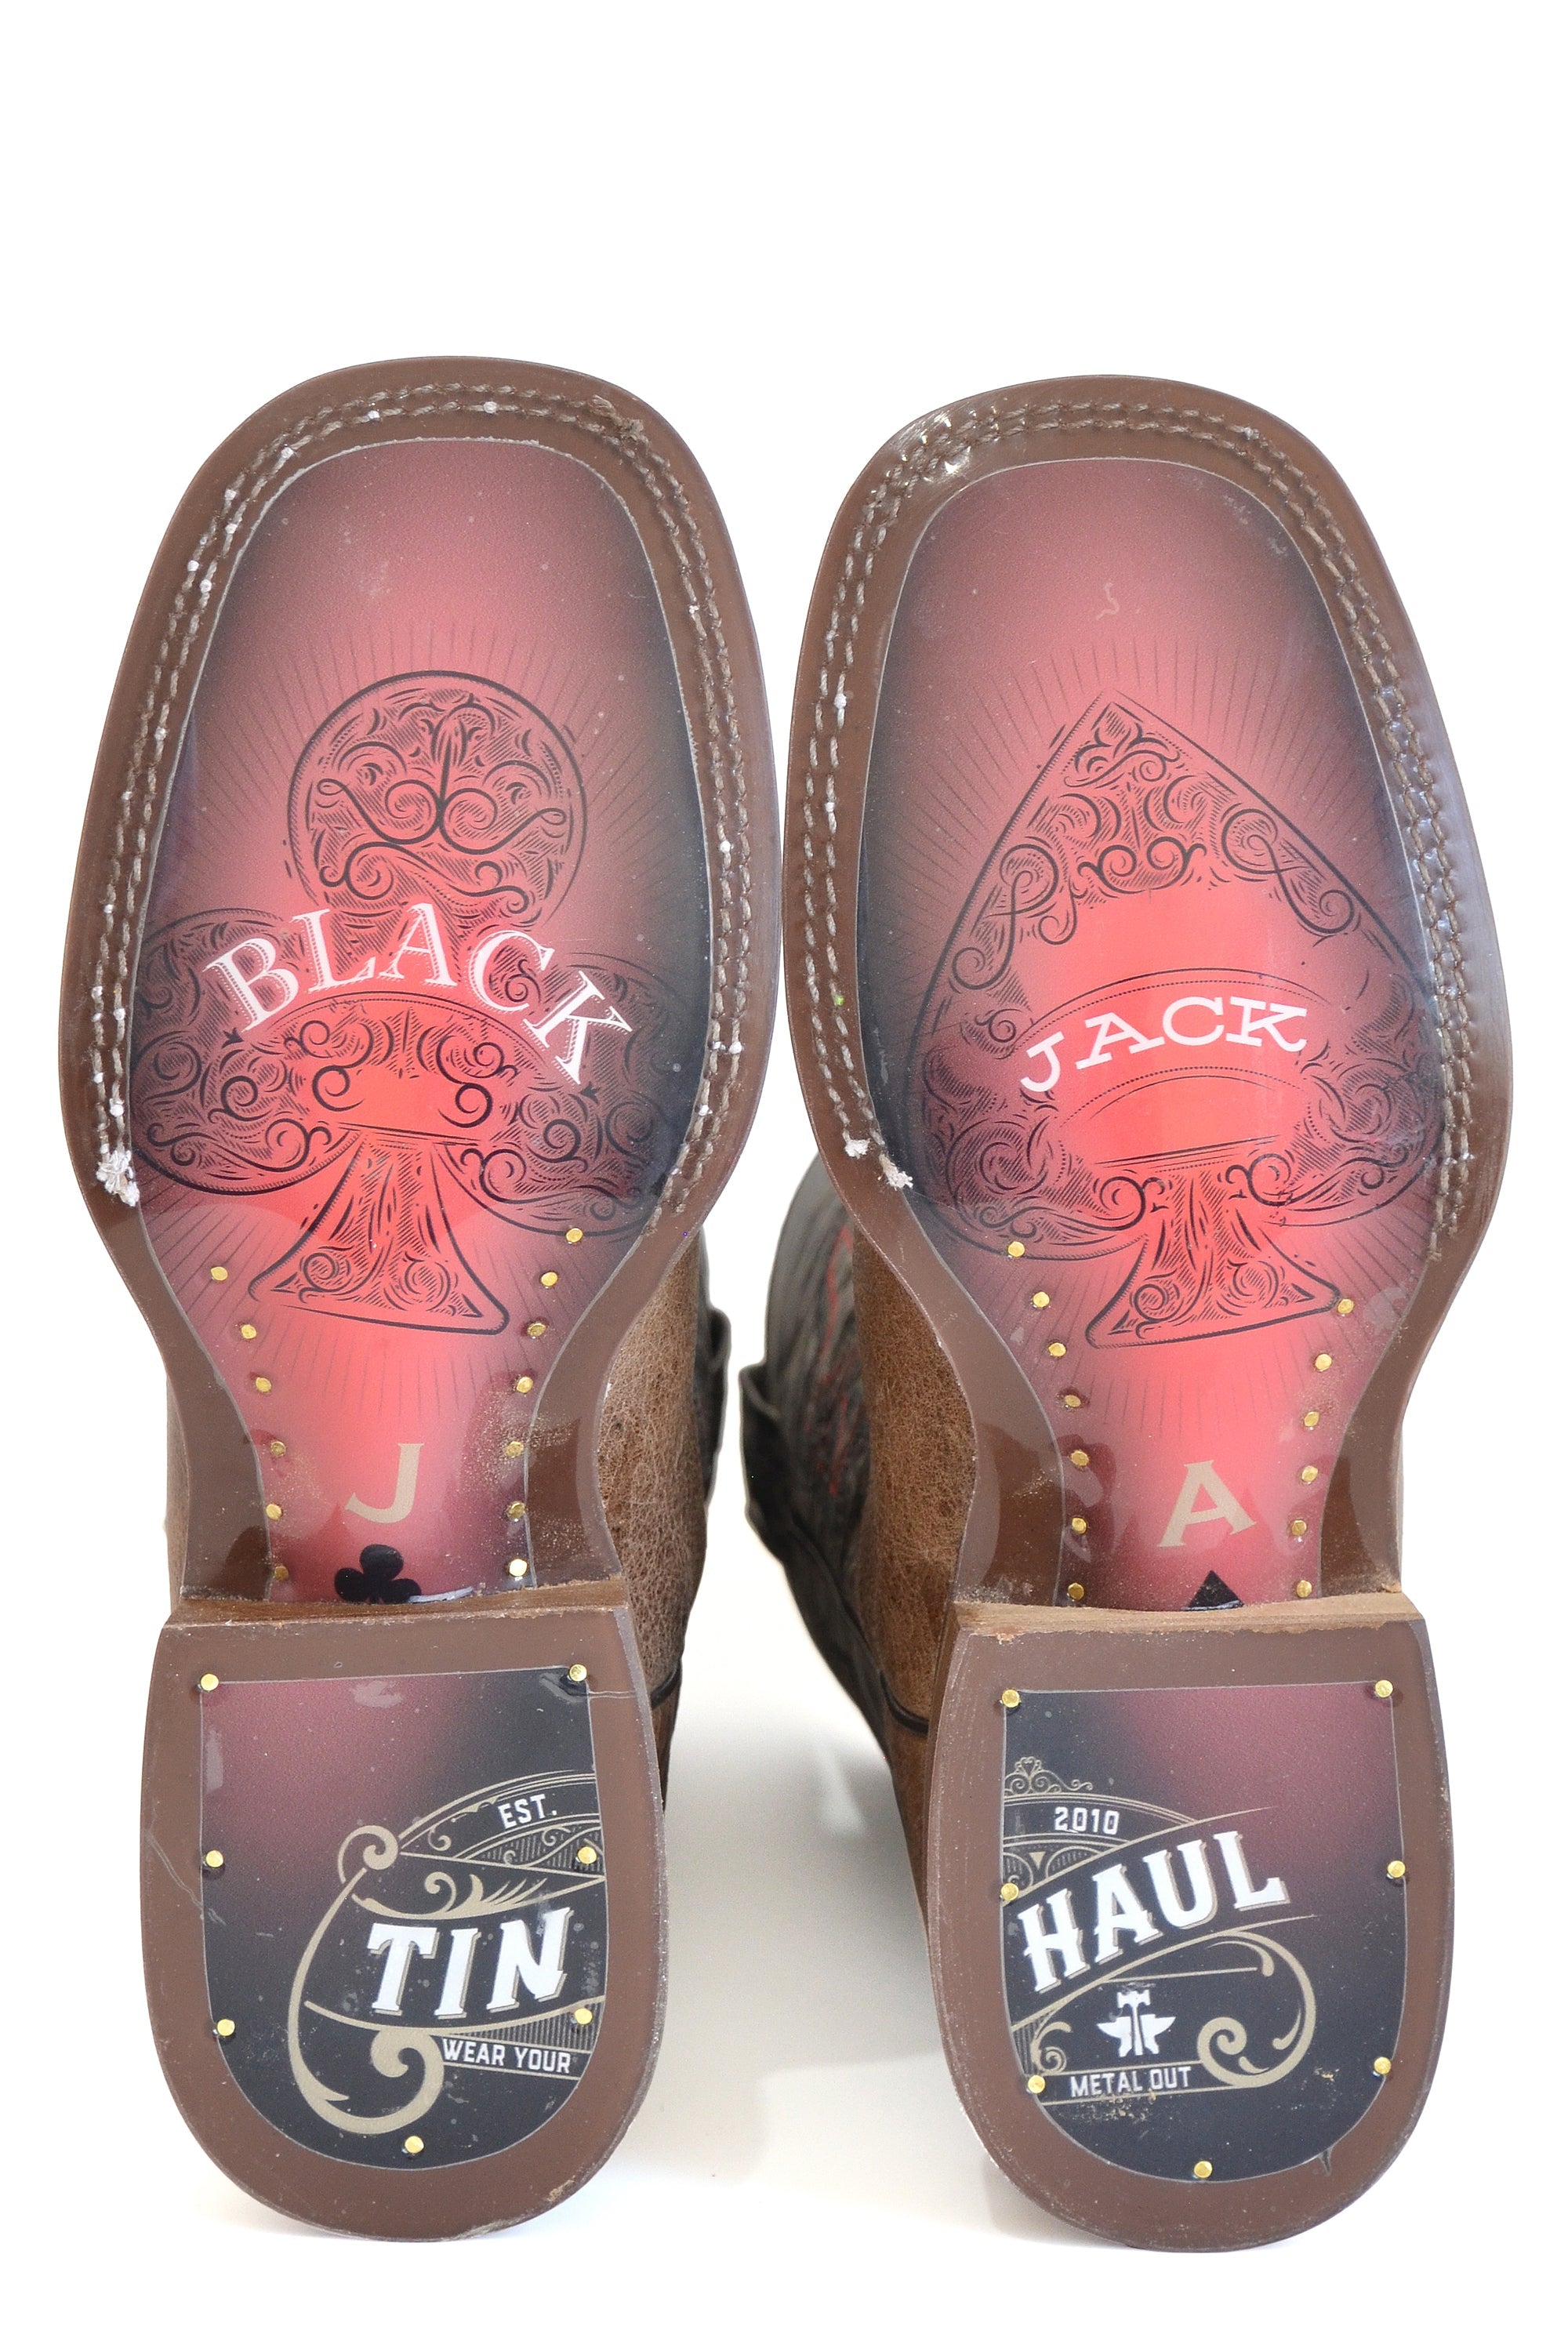 Tin Haul MENS BLACKJACK WITH WINNING SOLE - Flyclothing LLC